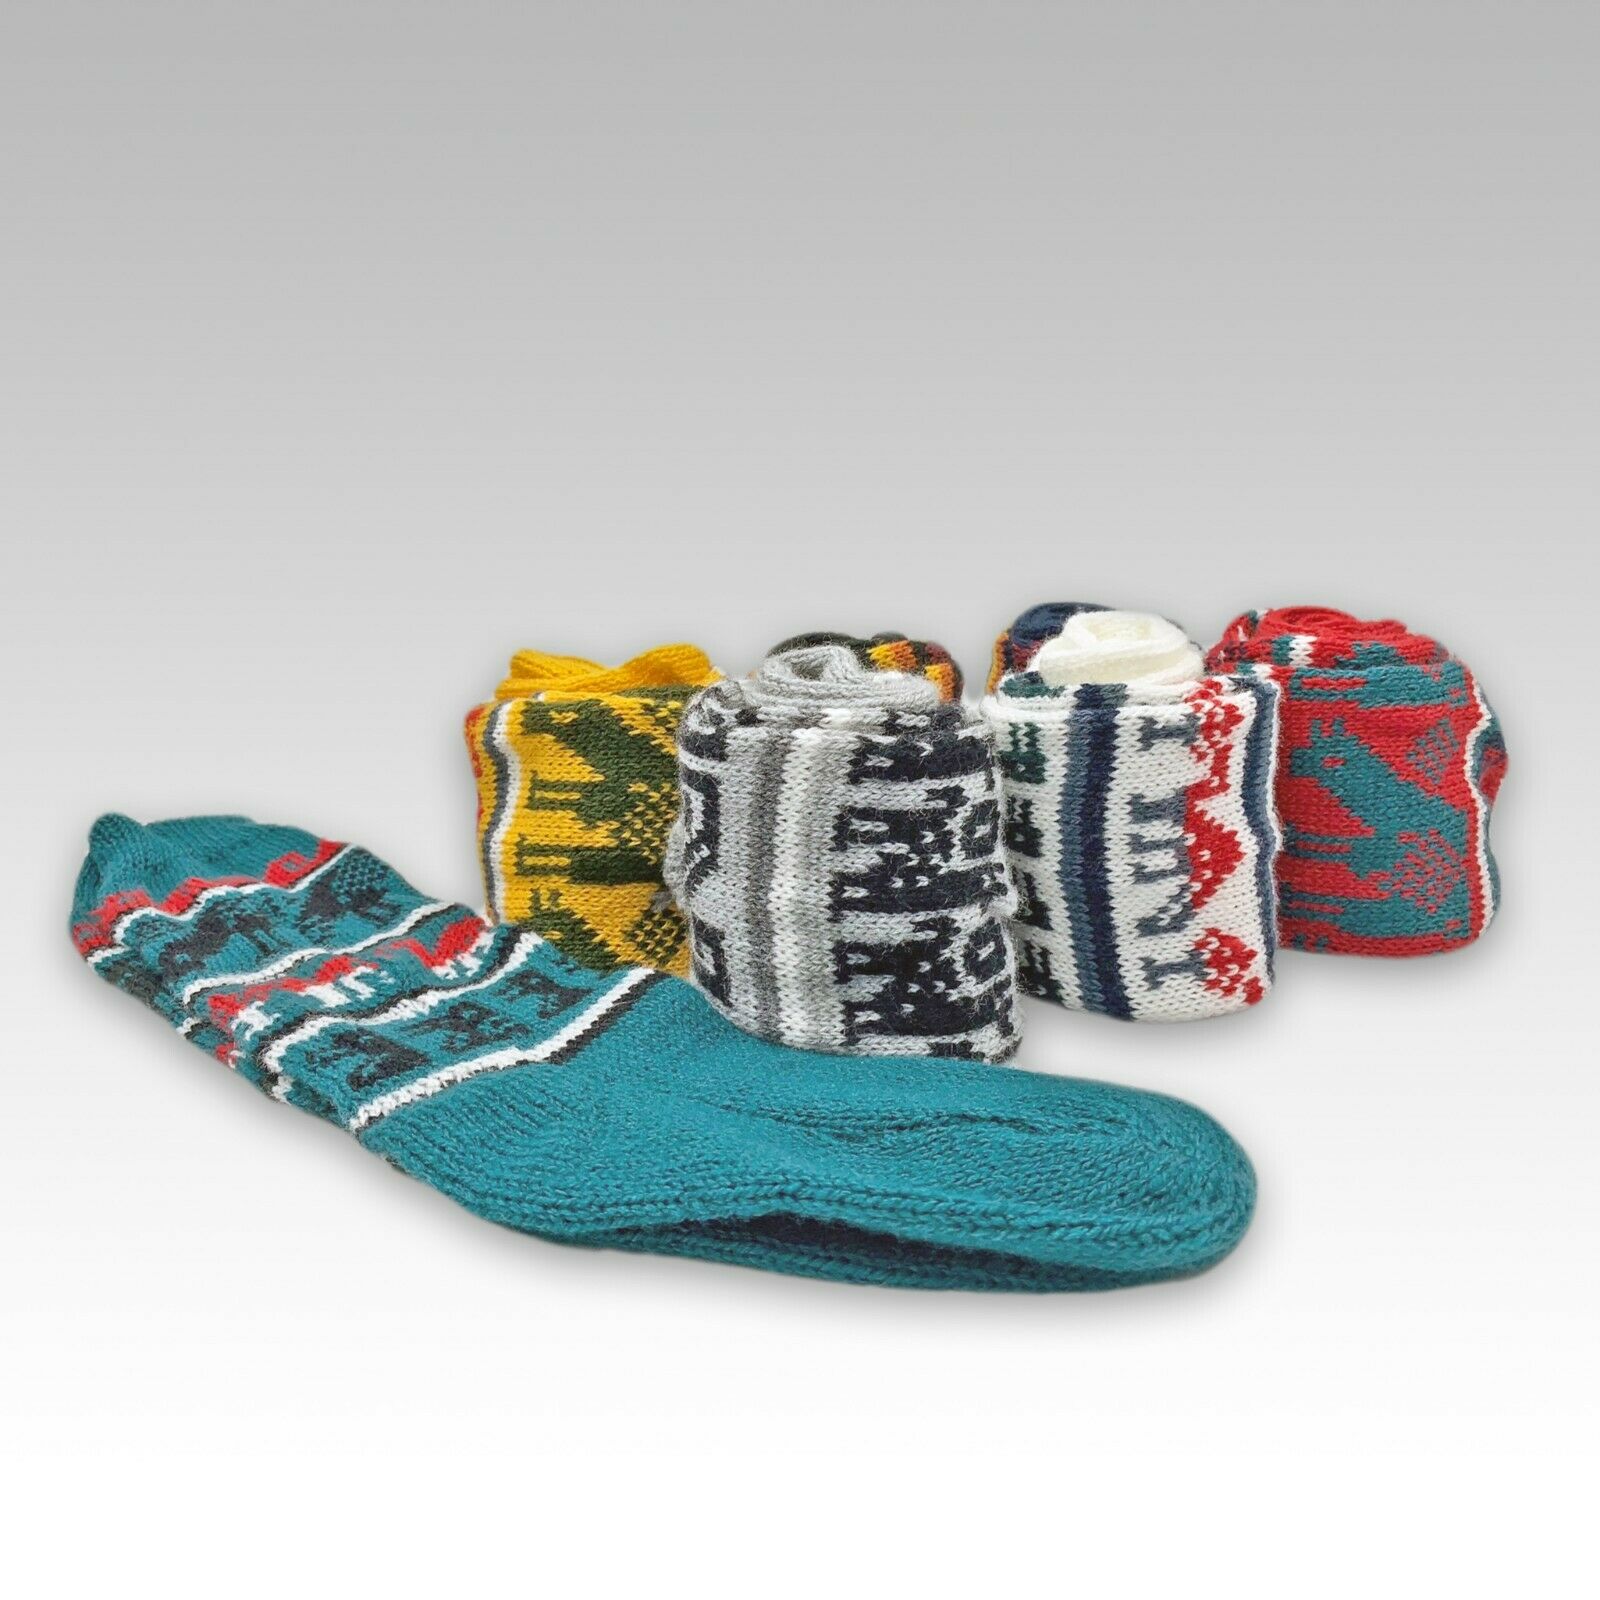 100 Pairs Wholesale Lot Of Handwoven Unisex Alpaca Wool Socks S-M Size